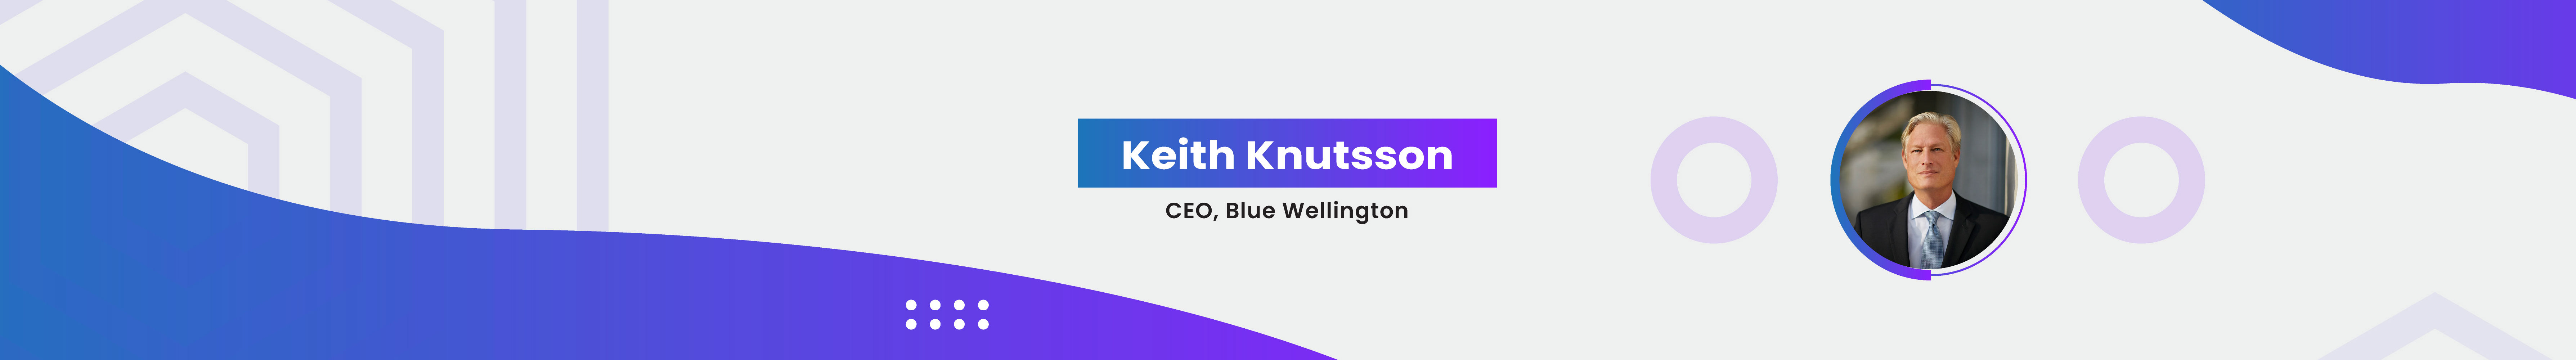 Keith Knutsson's profile banner